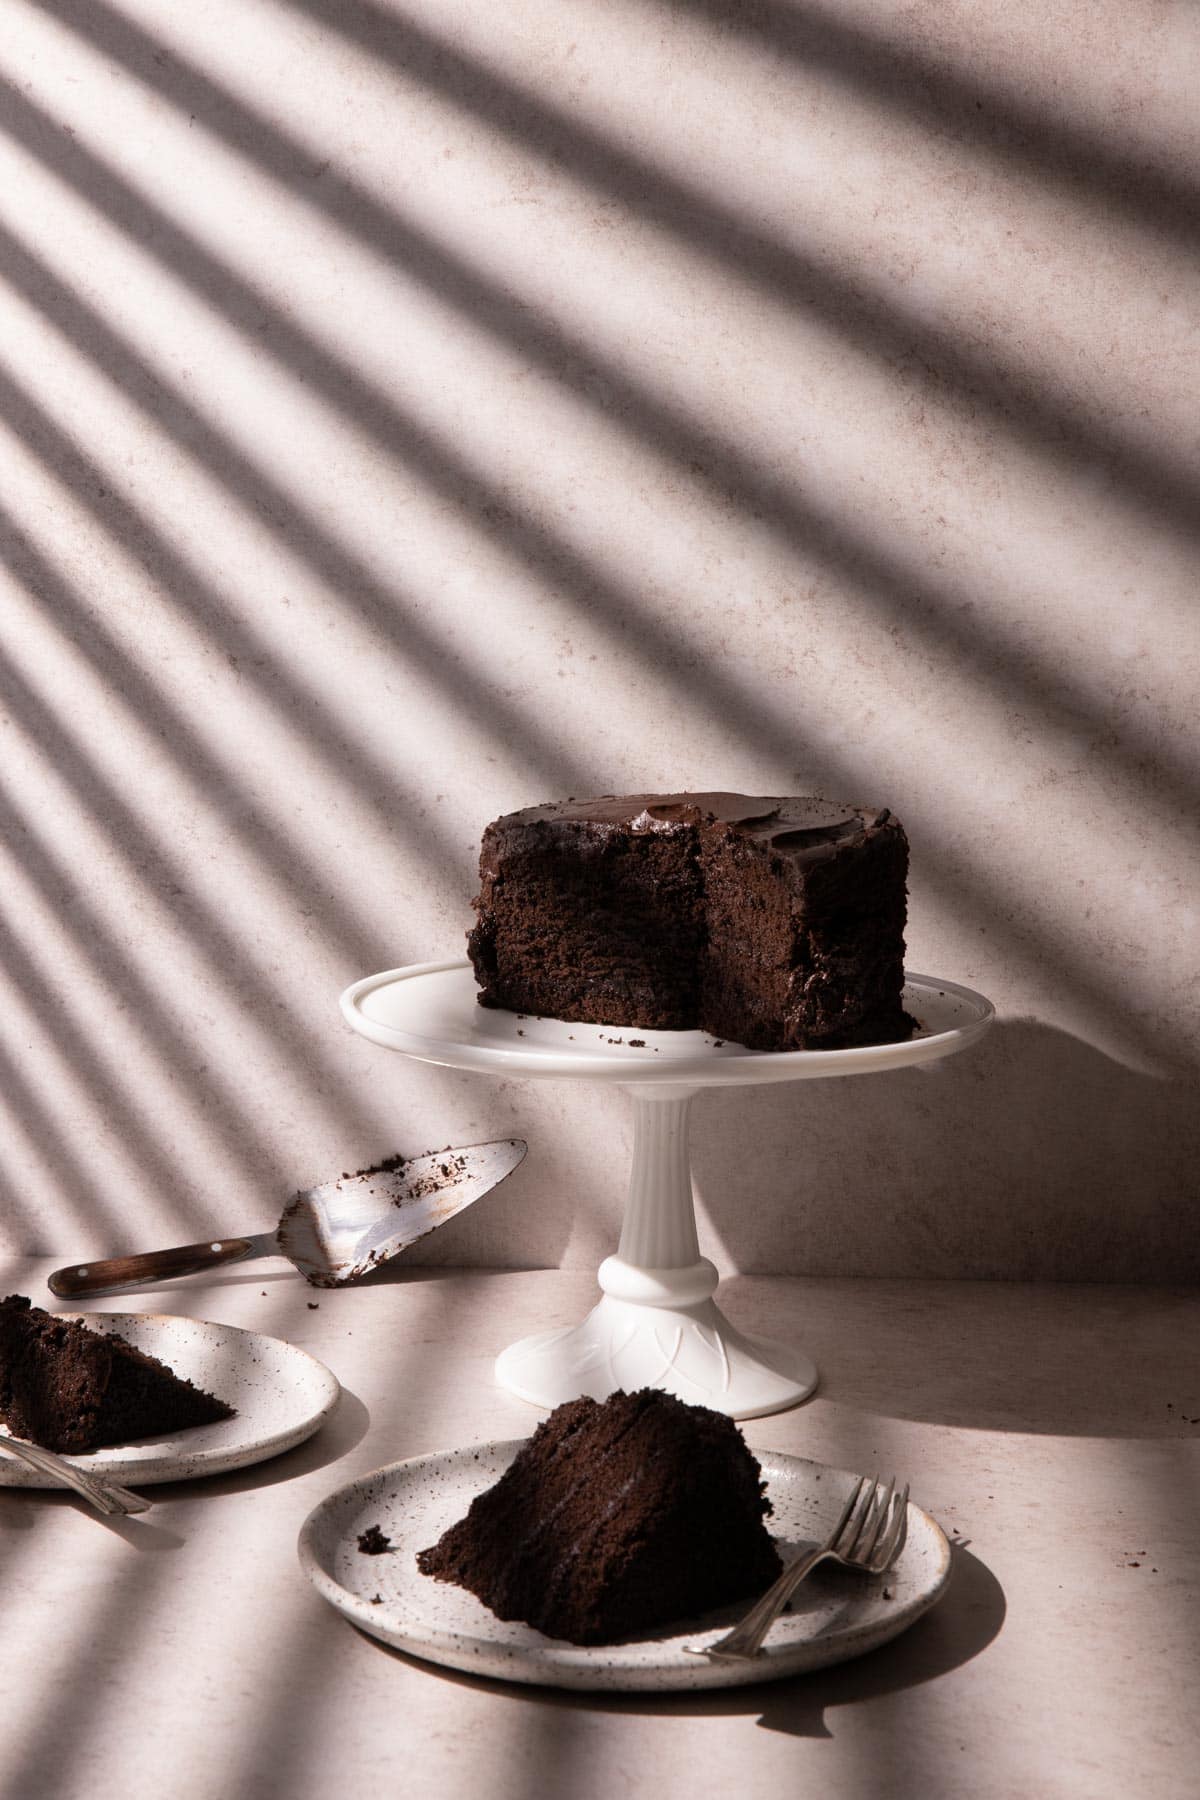 Chocolate cake with window blinds shadows